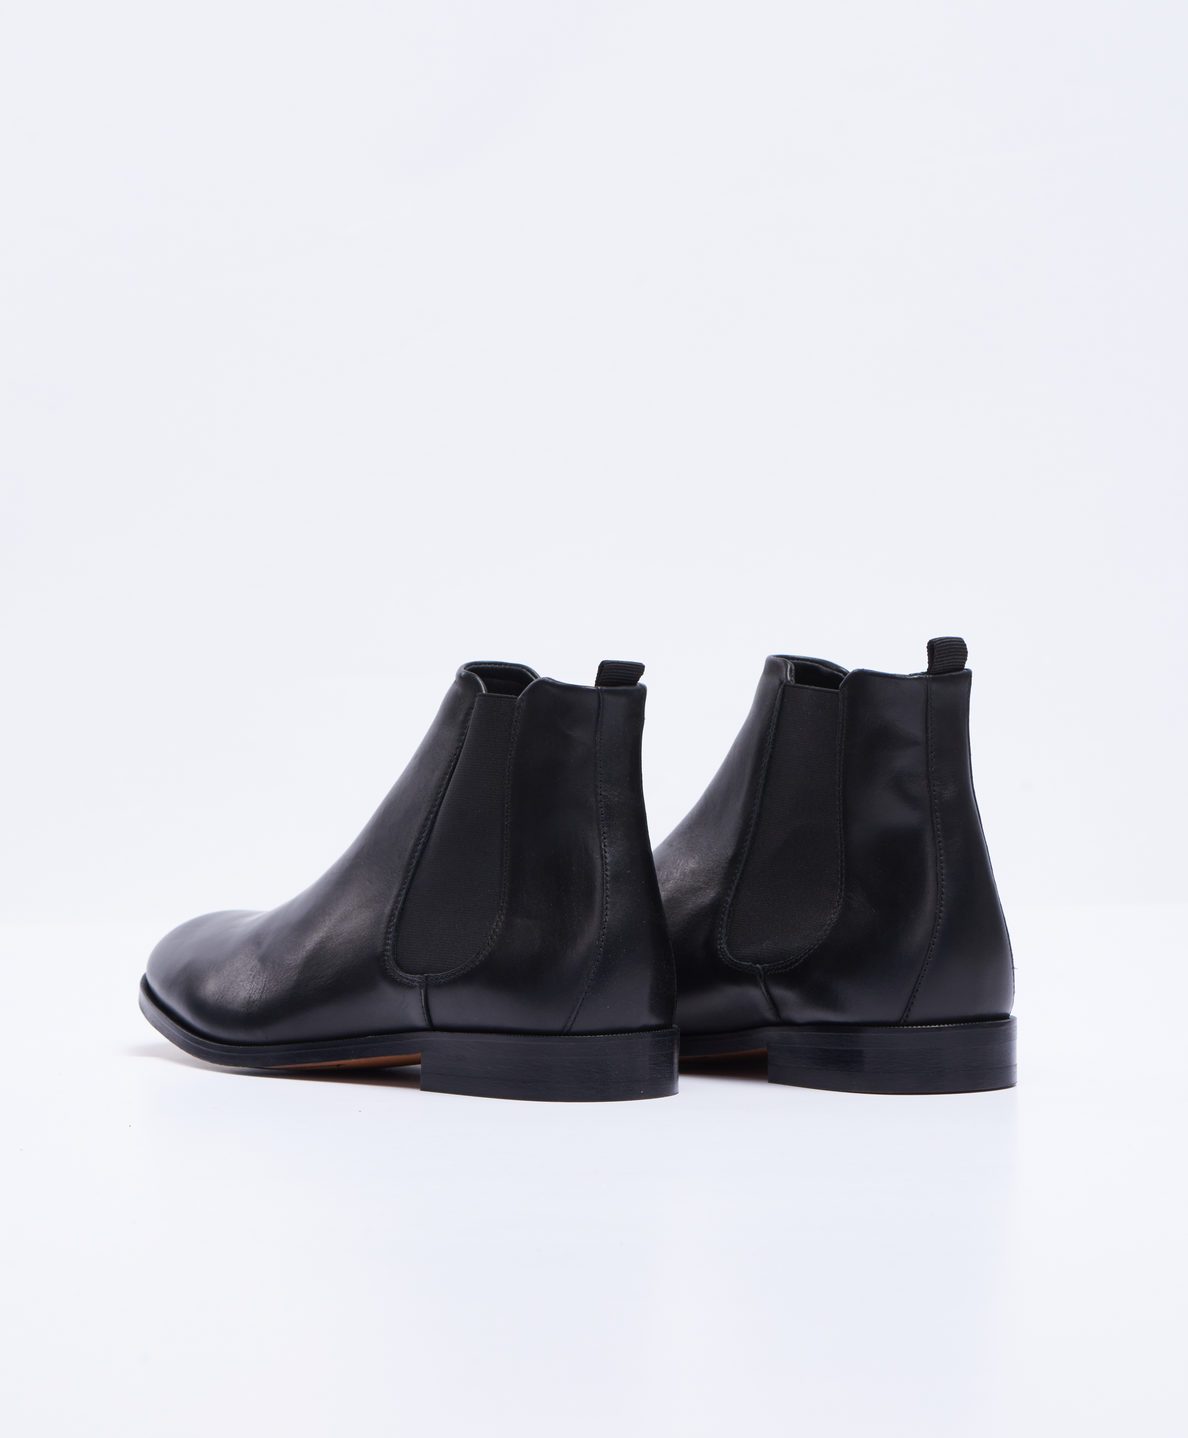 Royal RepubliQ Shoes Men’s Chelsea Boot - Black | CIRCA75.